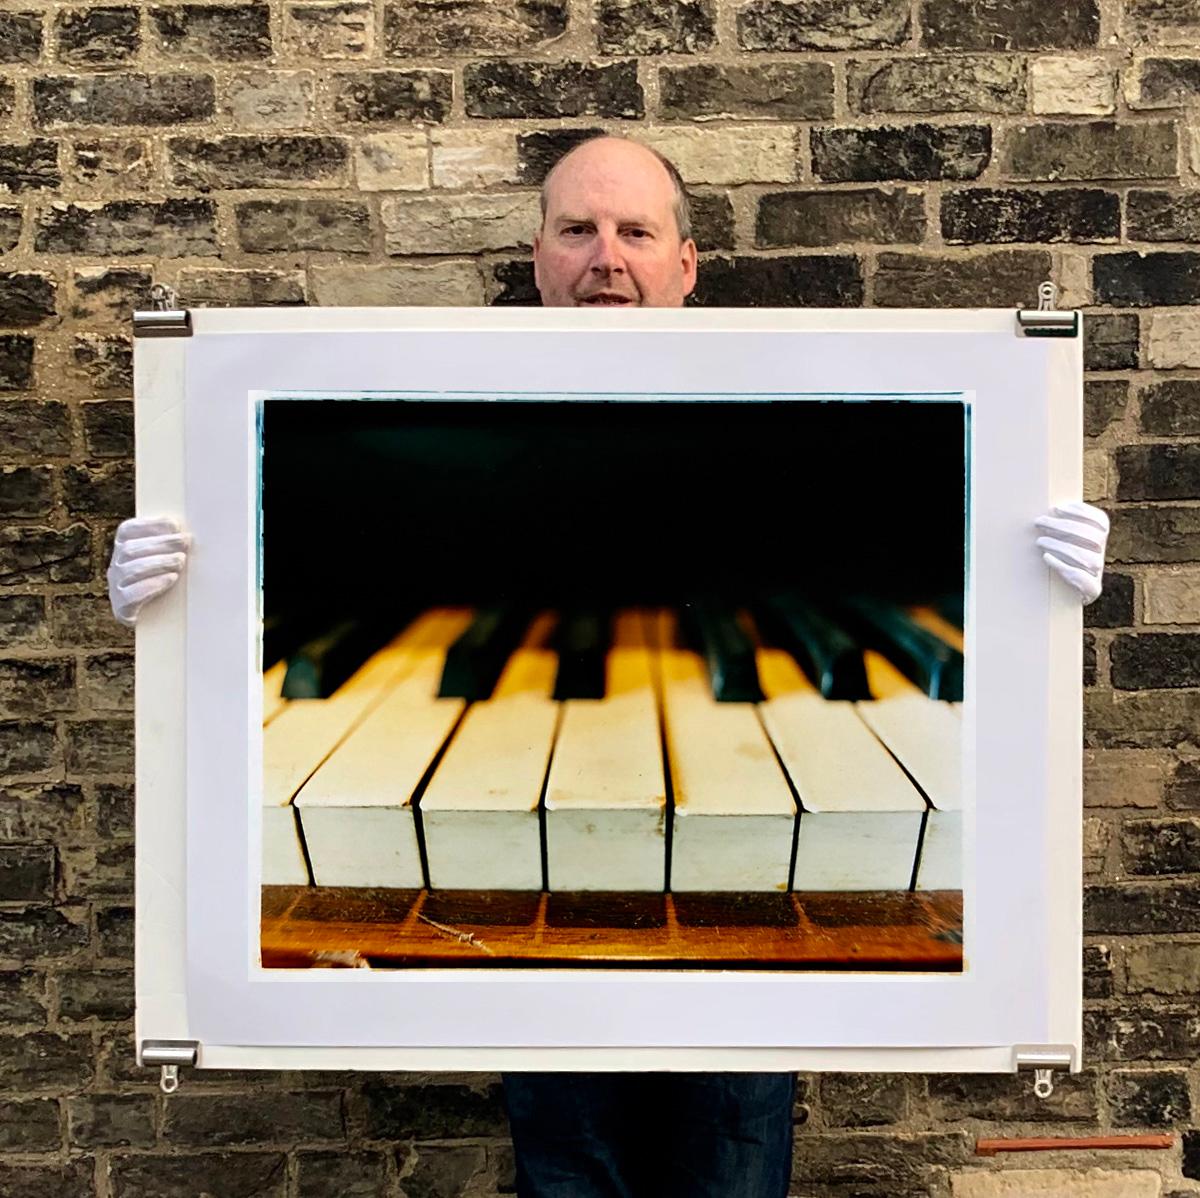 Piano Keys, Stockton-on-Tees - Music color photography - Print by Richard Heeps